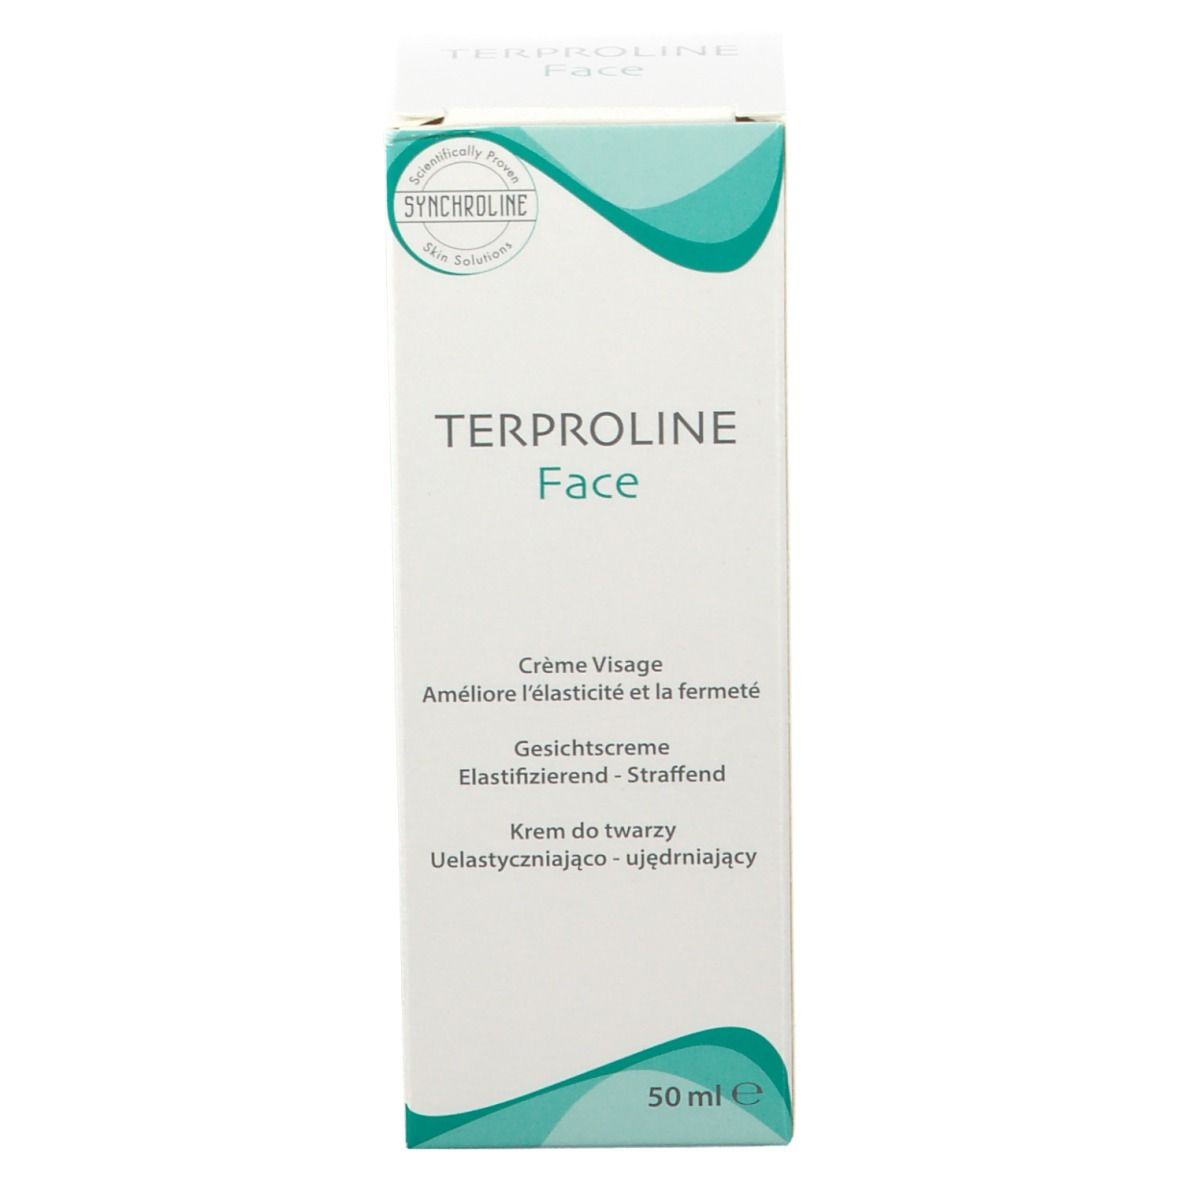 SYNCHROLINE TERPROLINE face cream